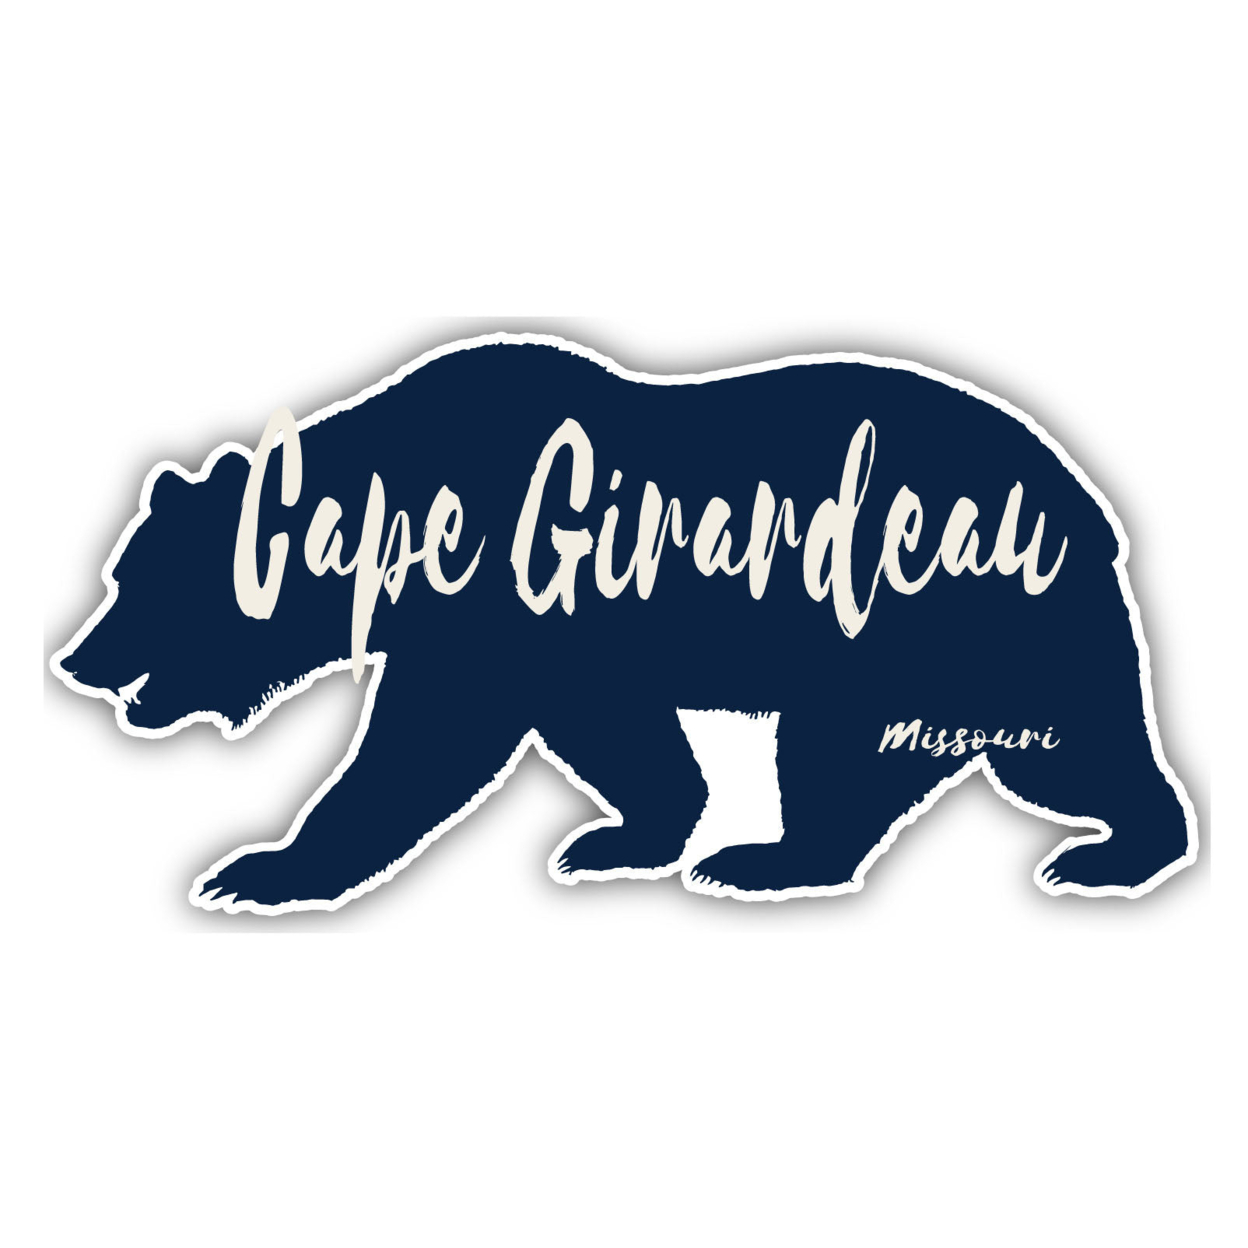 Cape Girardeau Missouri Souvenir Decorative Stickers (Choose Theme And Size) - 4-Pack, 10-Inch, Bear